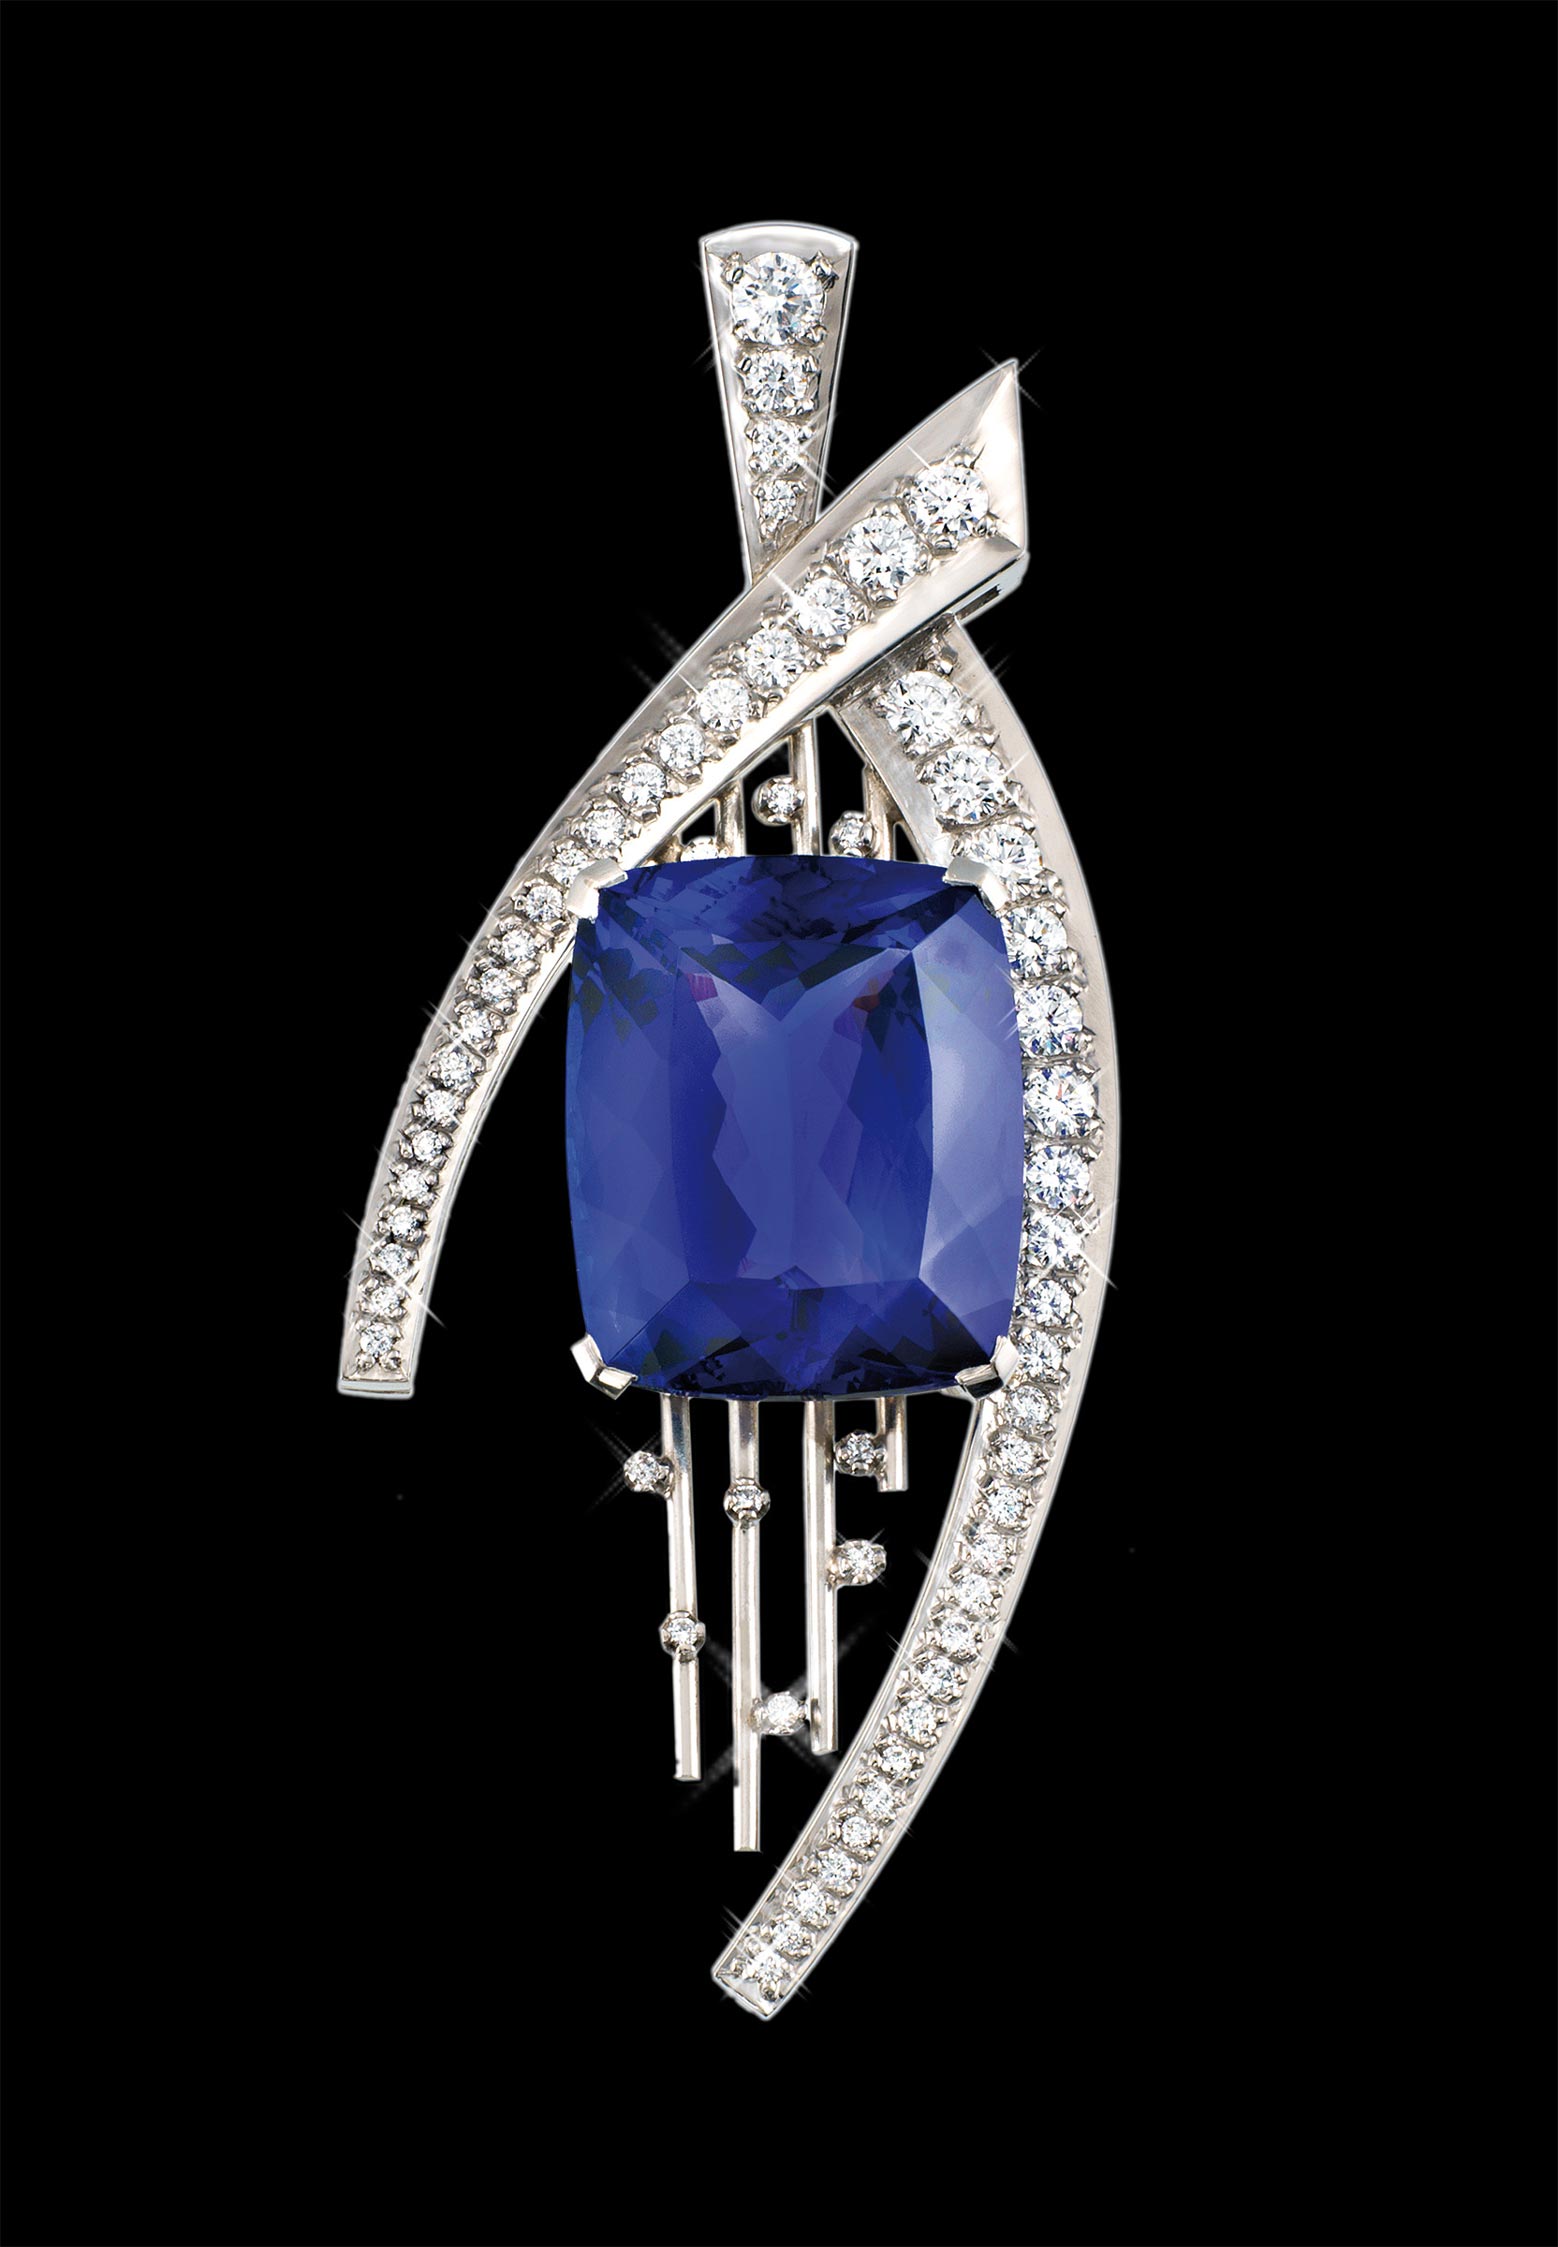 Diamond jewellery with blue sapphire on black background